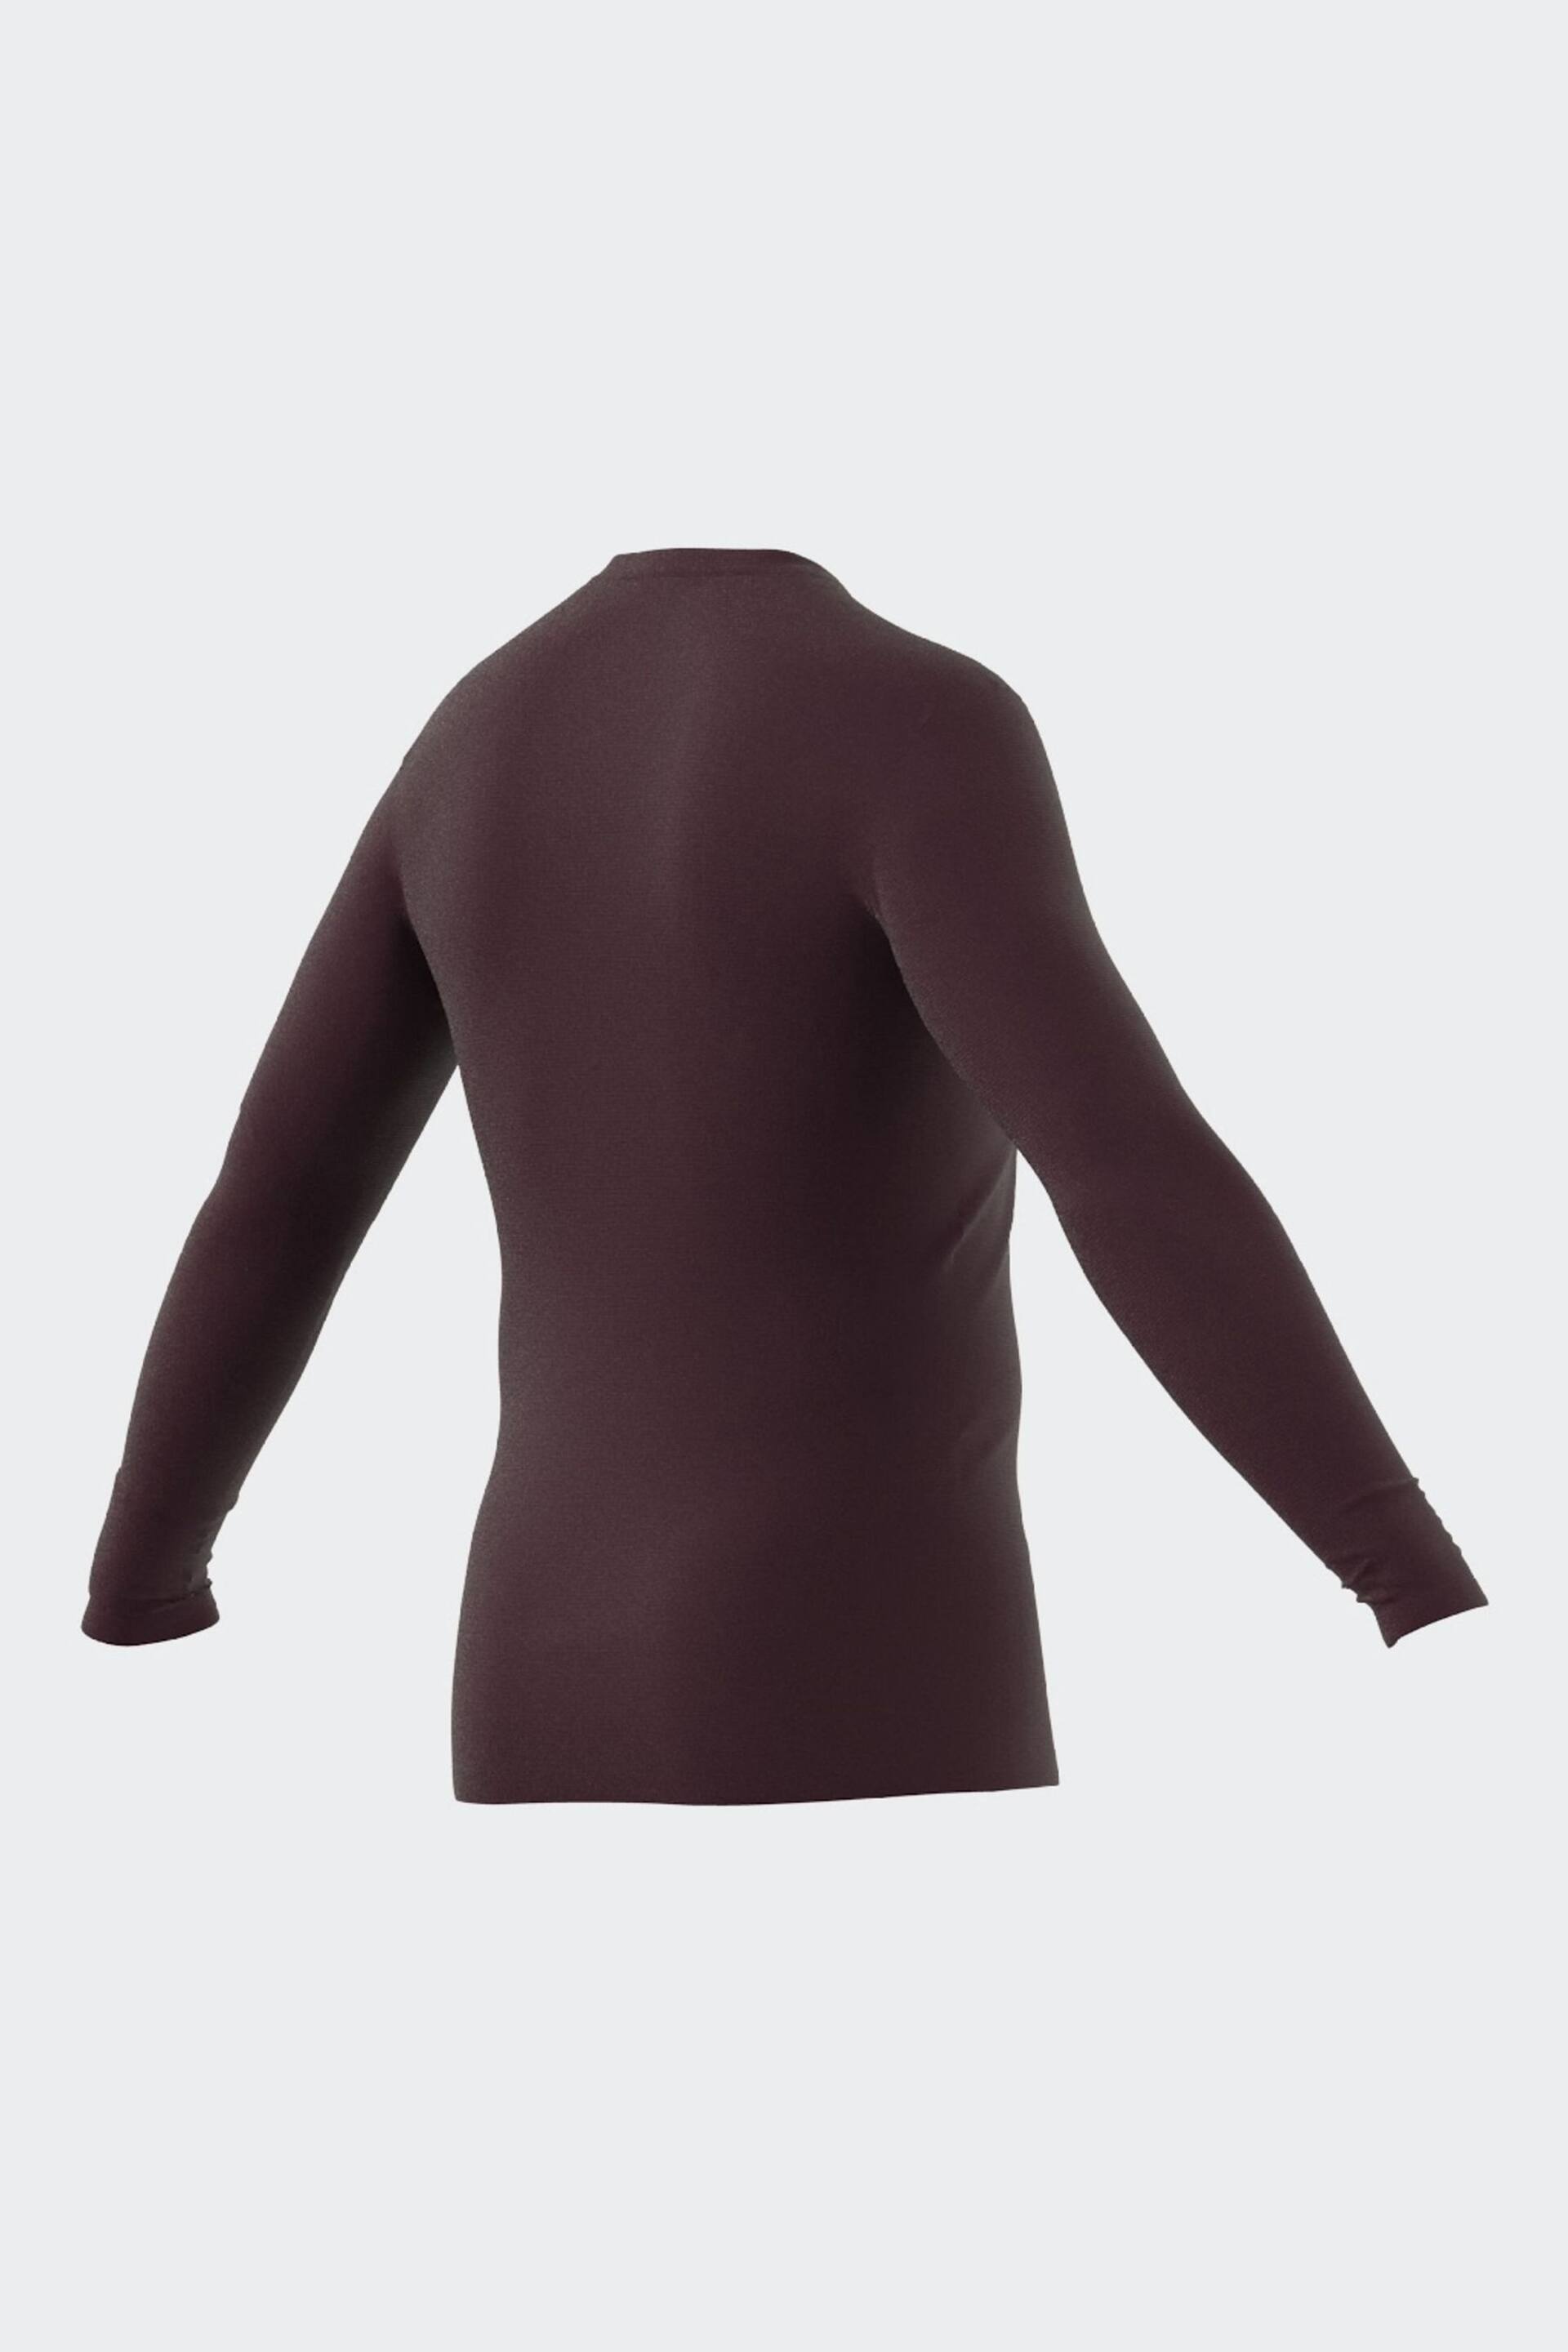 adidas Burgundy Teamwear Base Layer Long Sleeve Top - Image 4 of 4